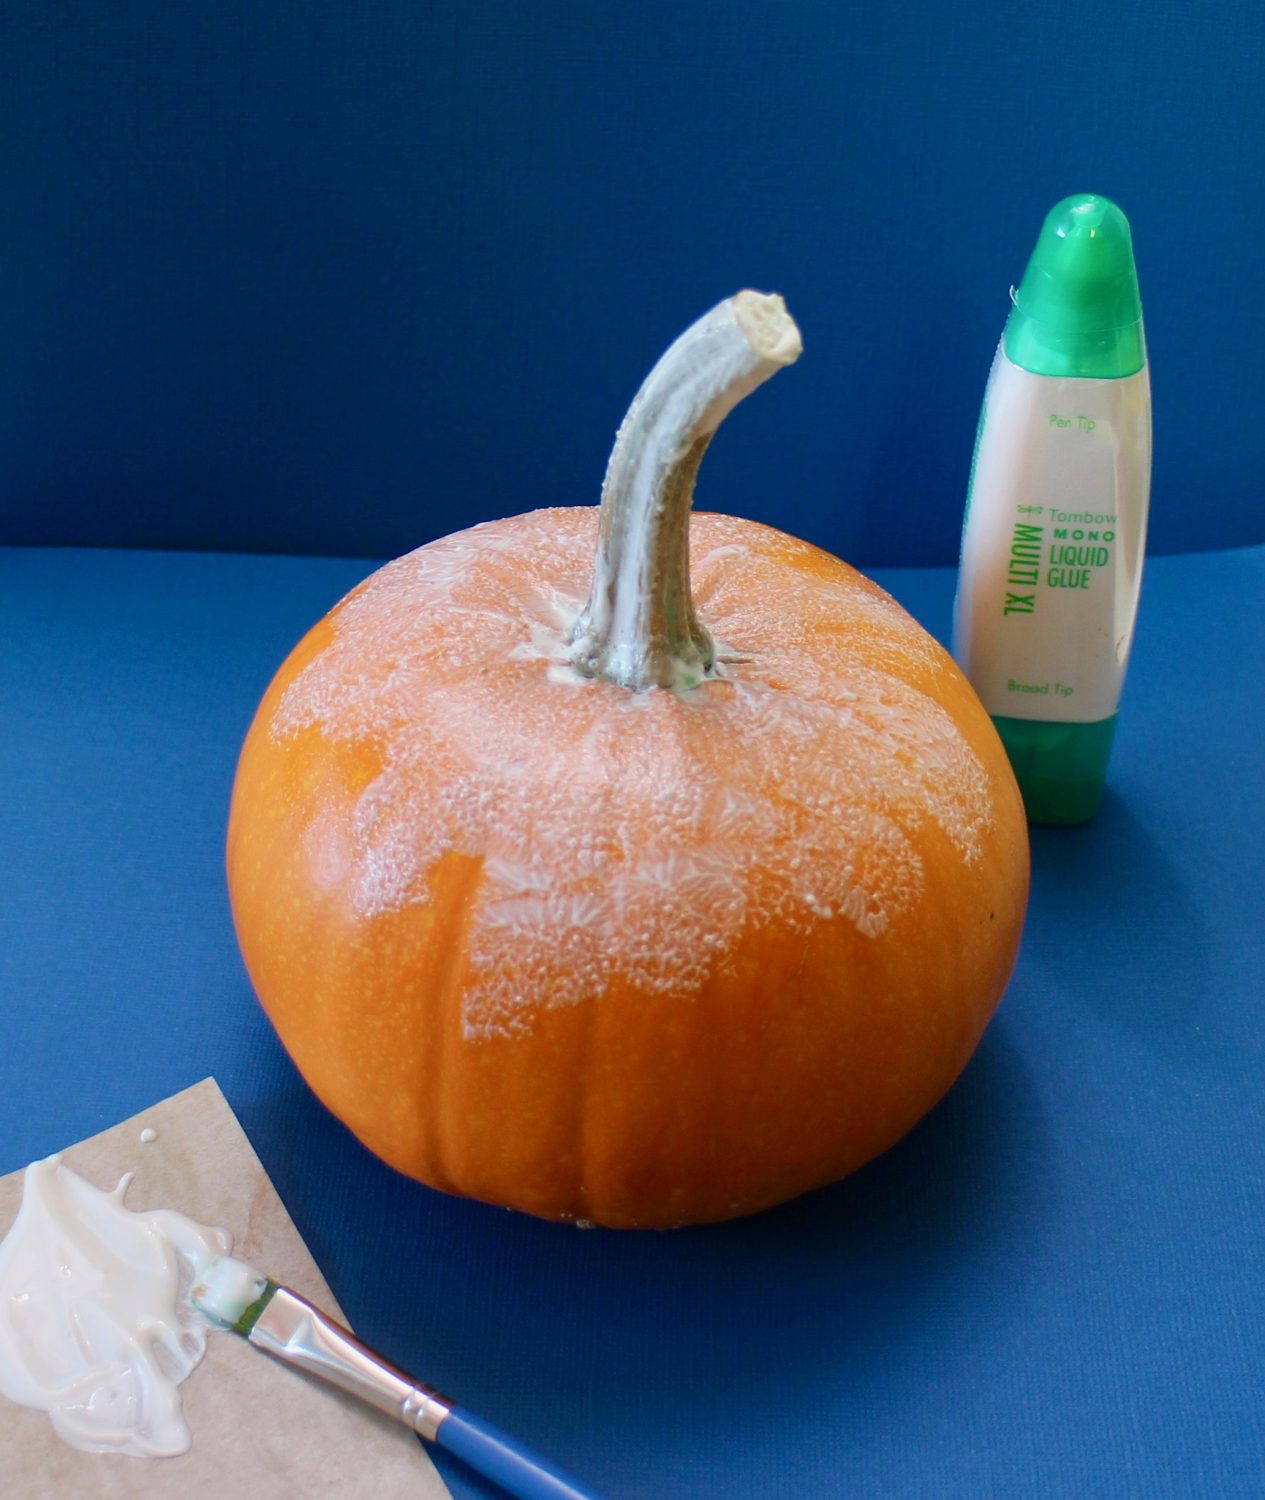 apply the glue to the pumpkin @mariebrowning #tombowusa #falldecor